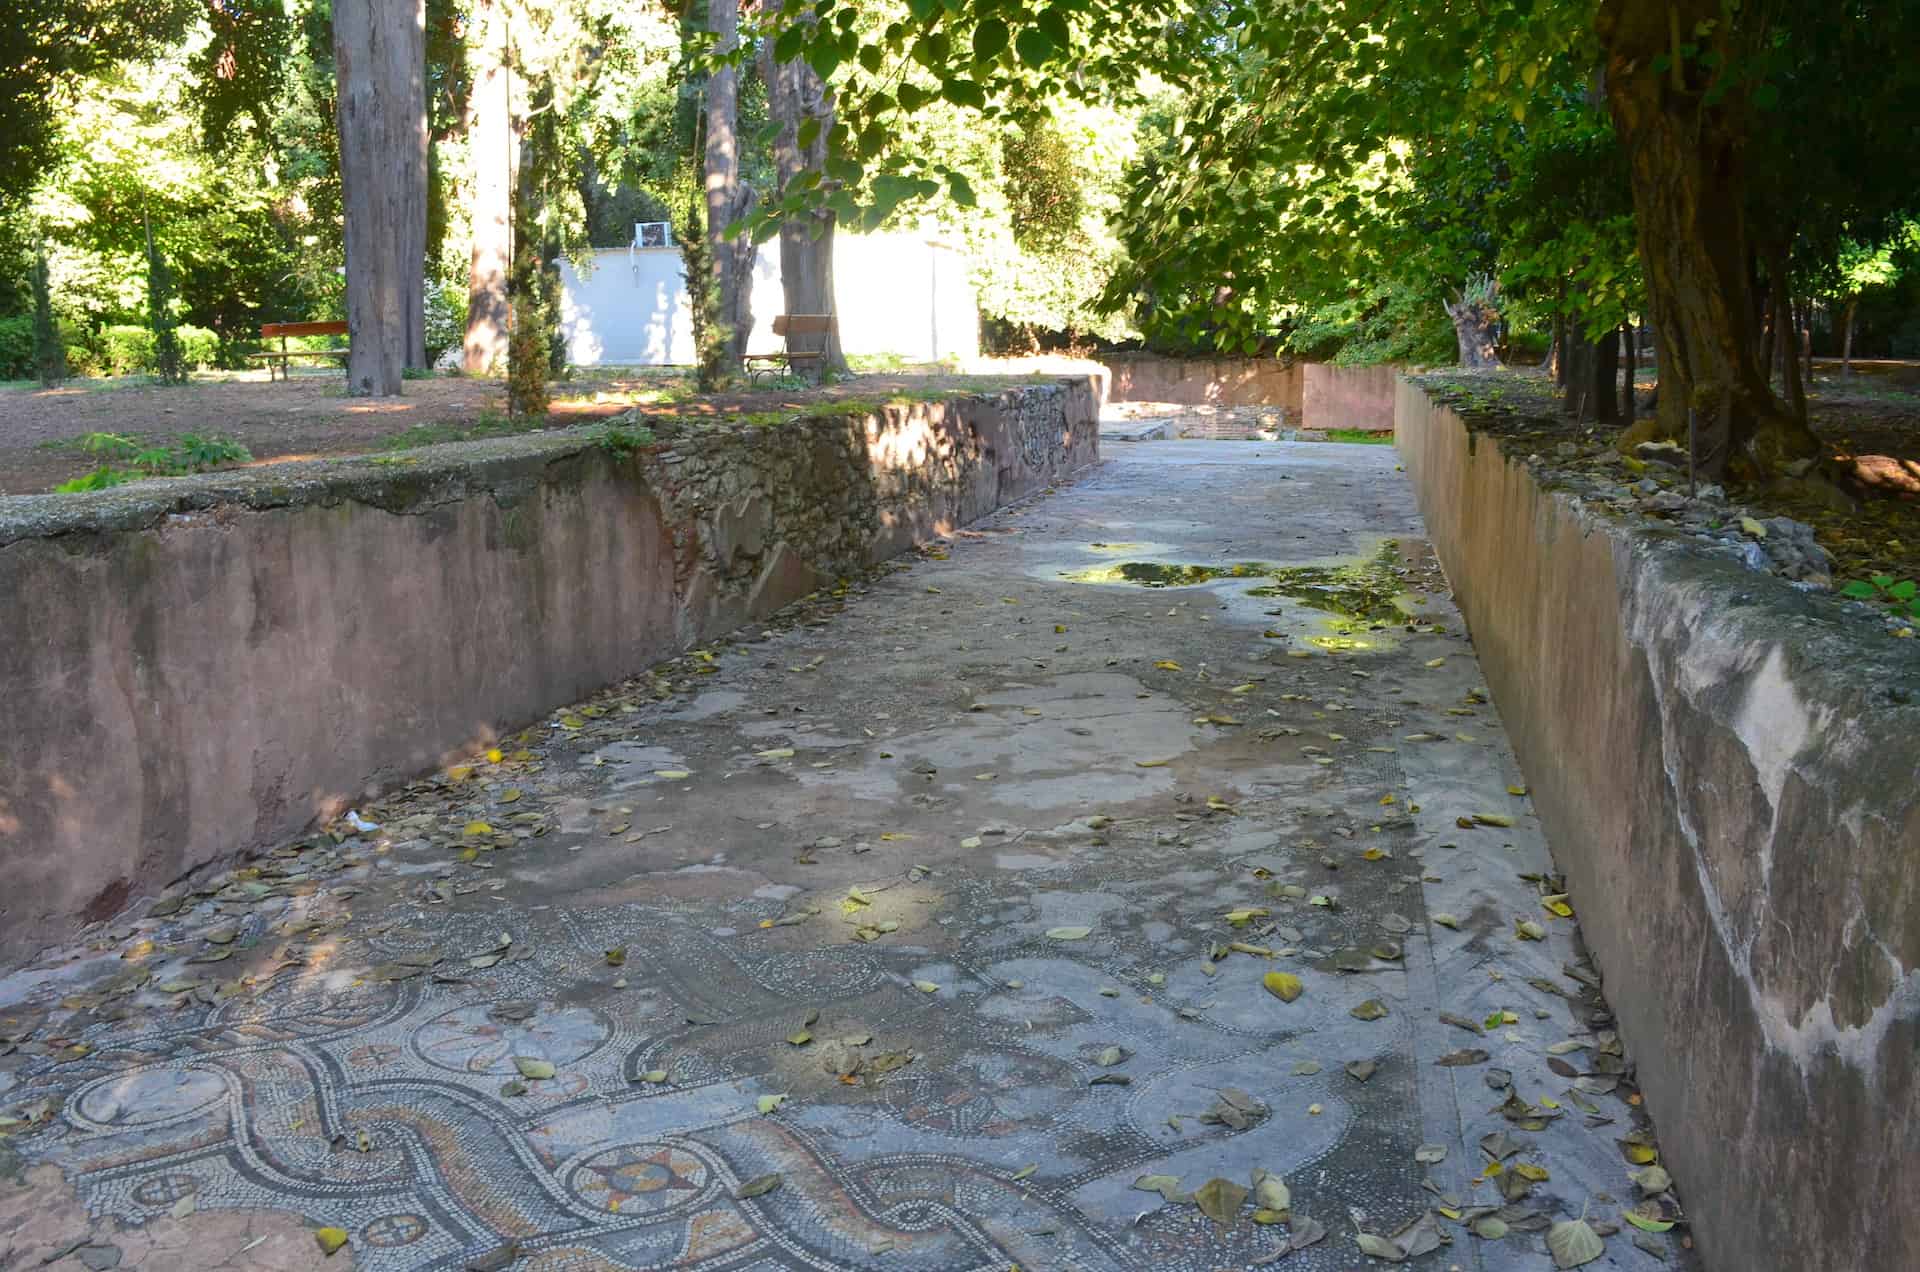 Path to the Roman mosaic